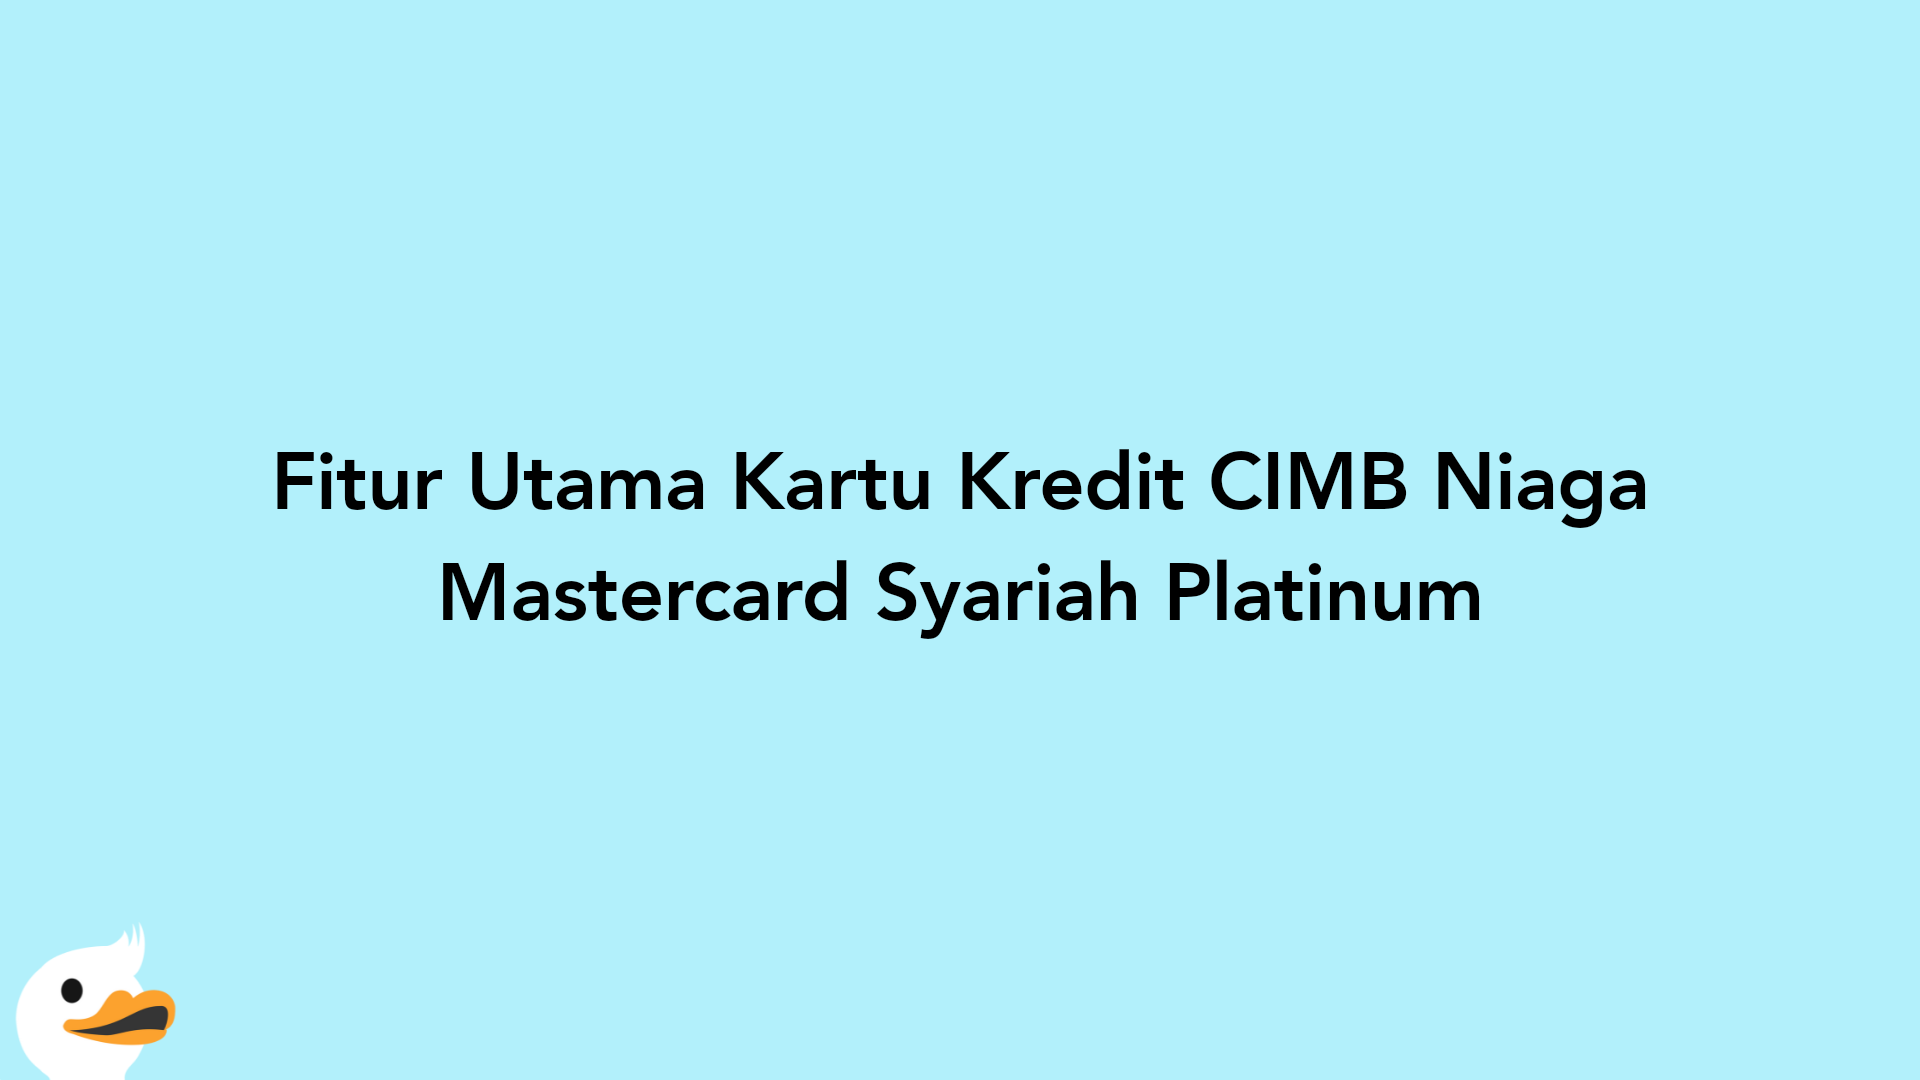 Fitur Utama Kartu Kredit CIMB Niaga Mastercard Syariah Platinum